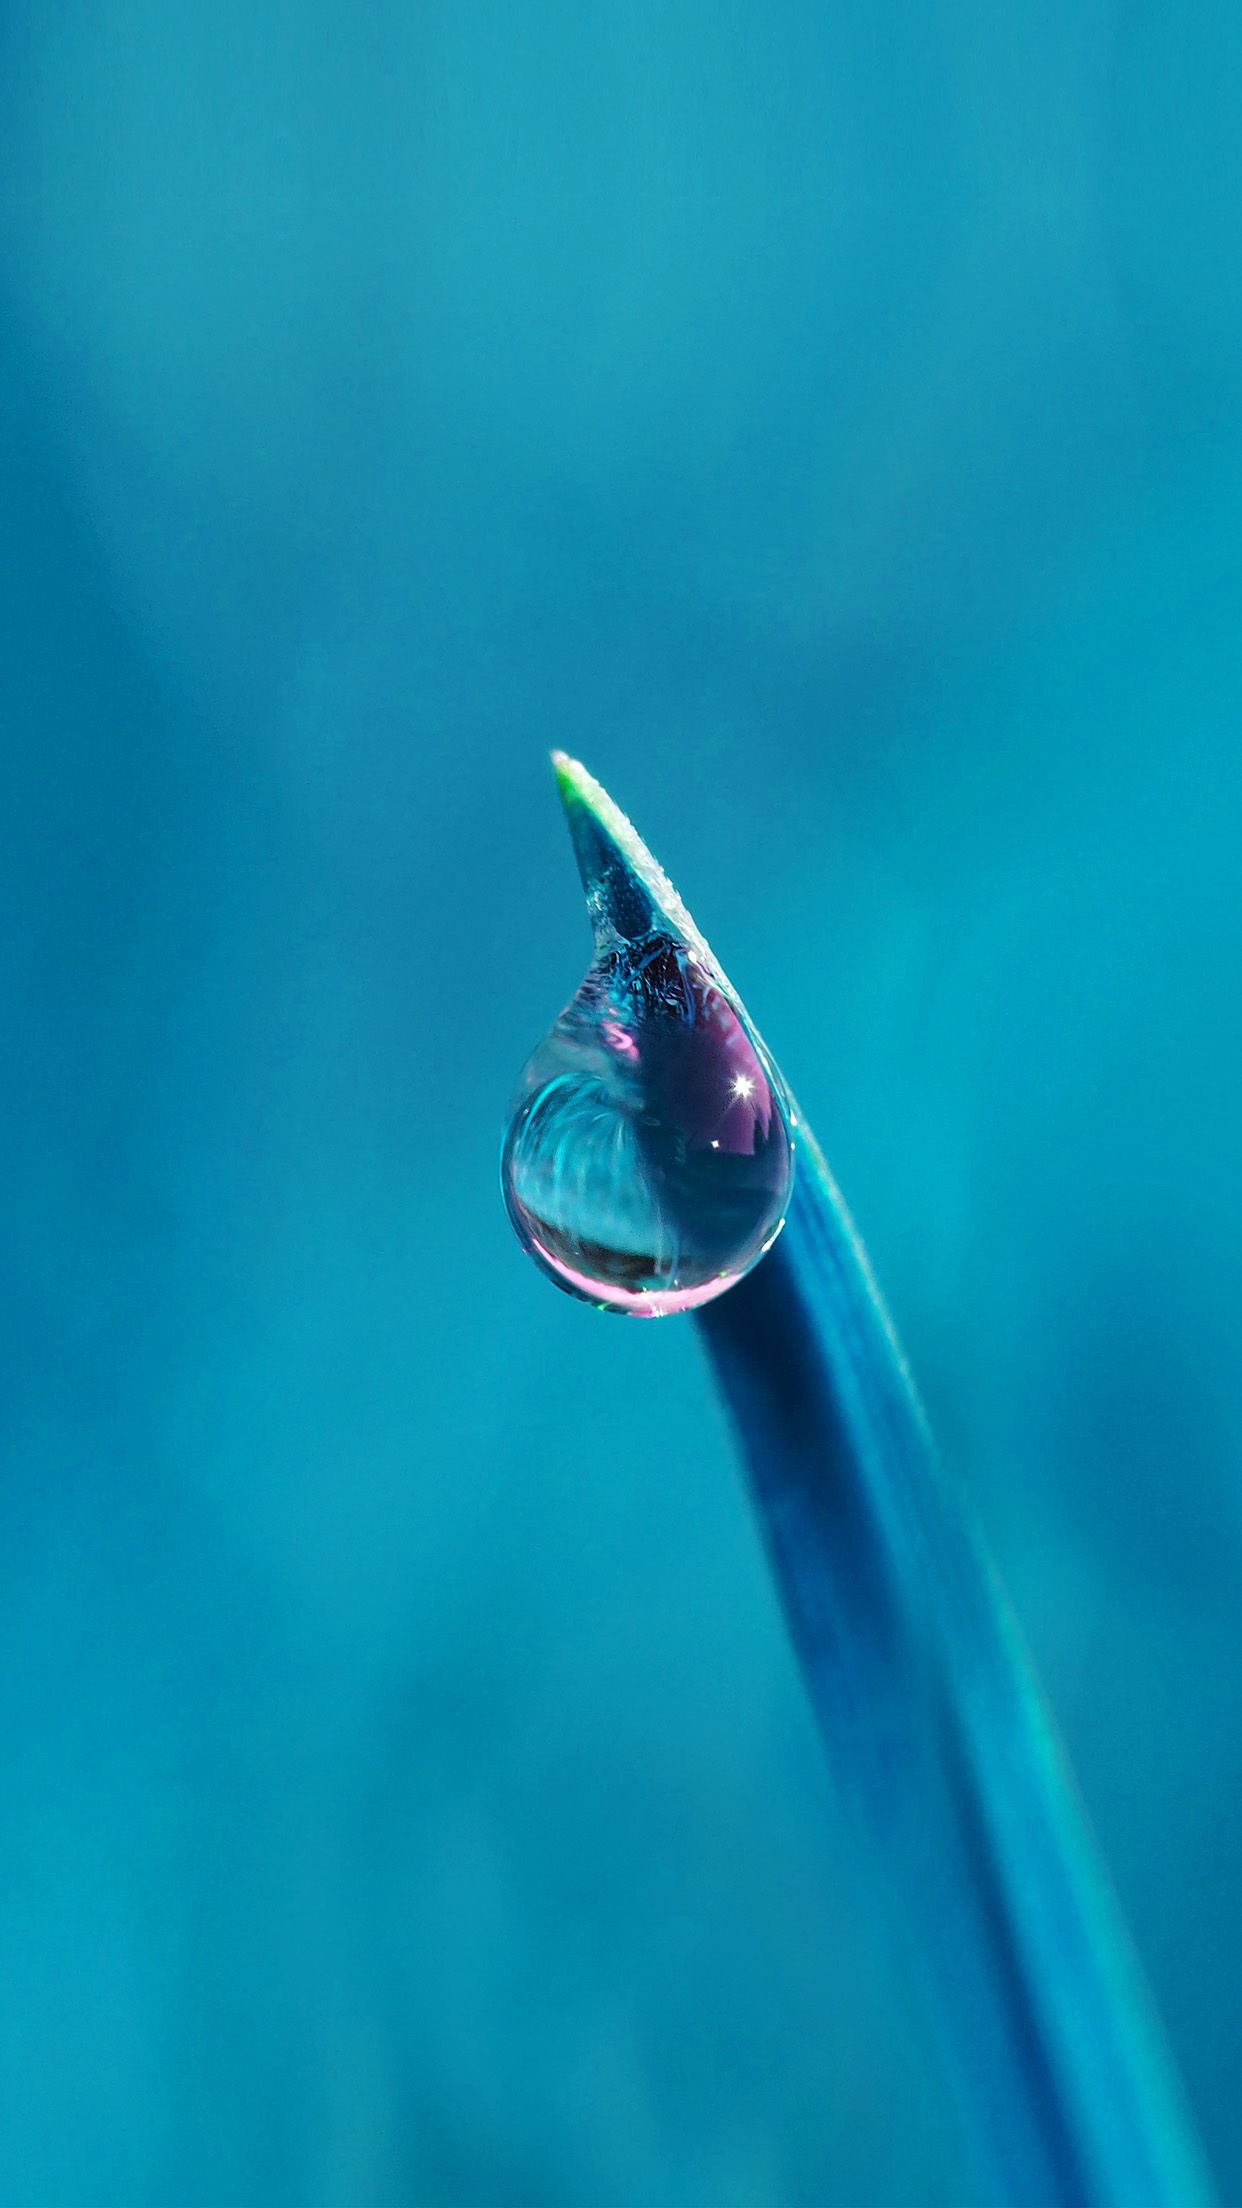 iPhone X wallpaper. water drip rain blue